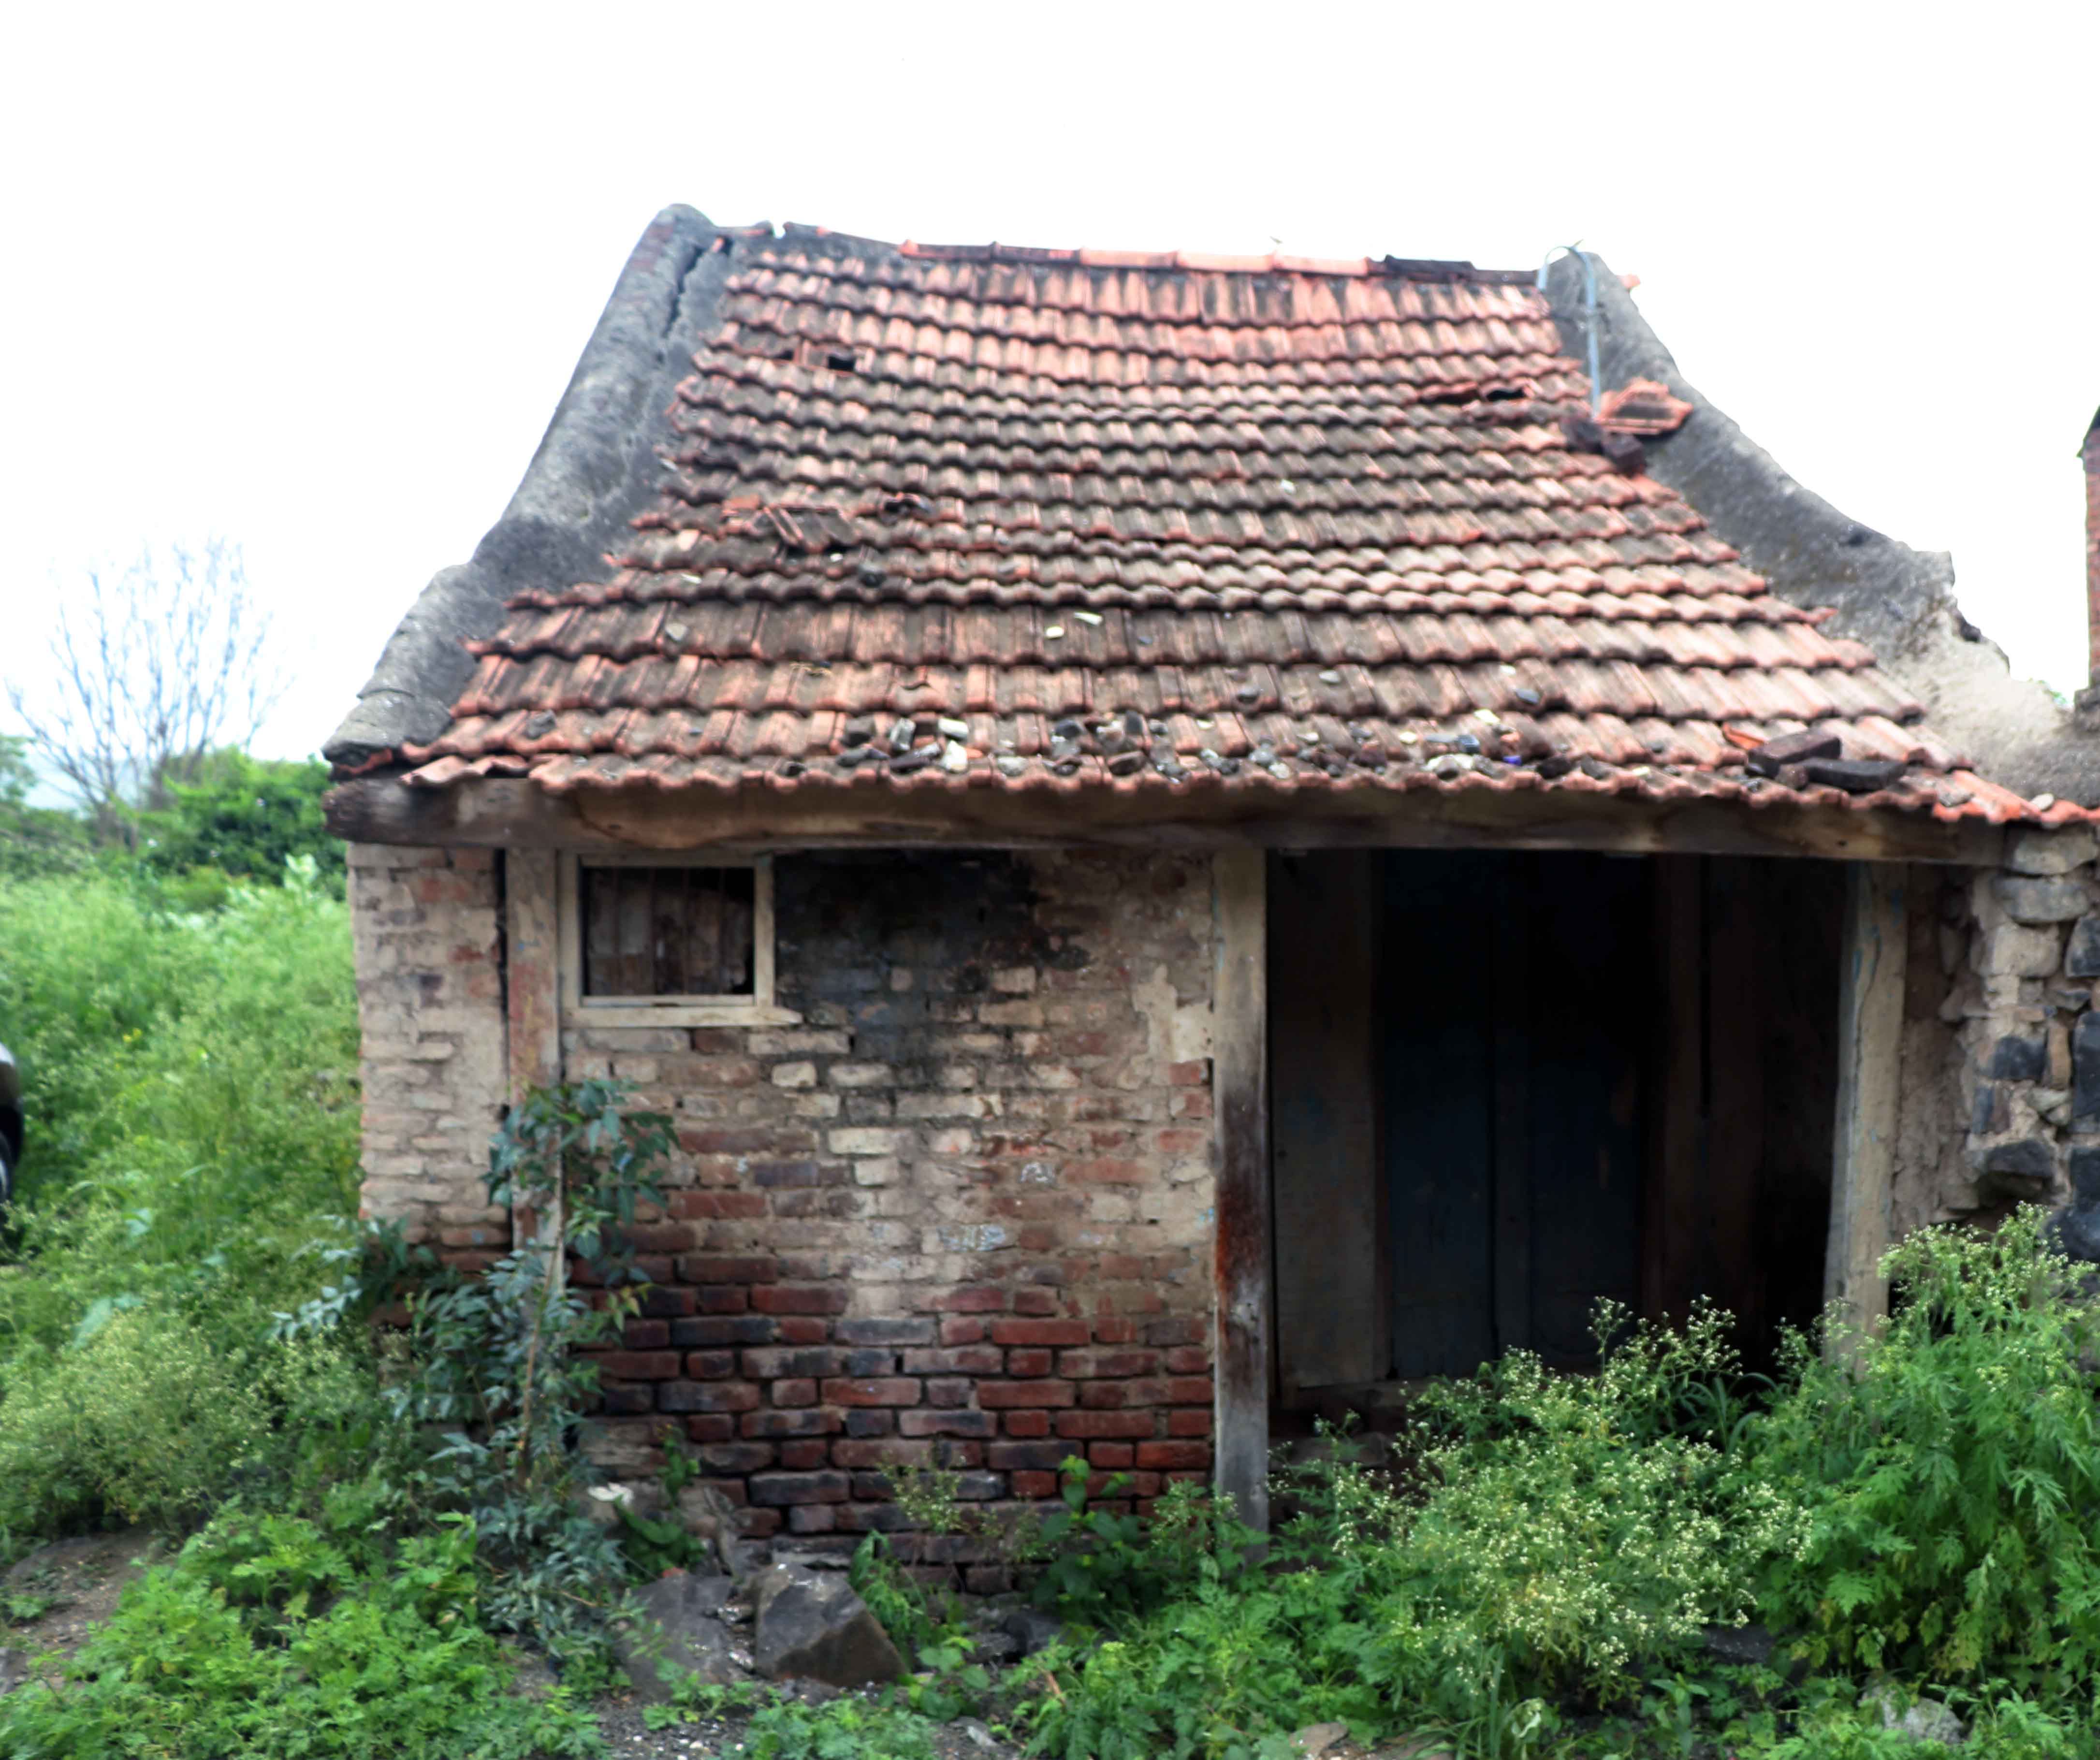 File:Old-hut.jpg - Wikimedia Commons